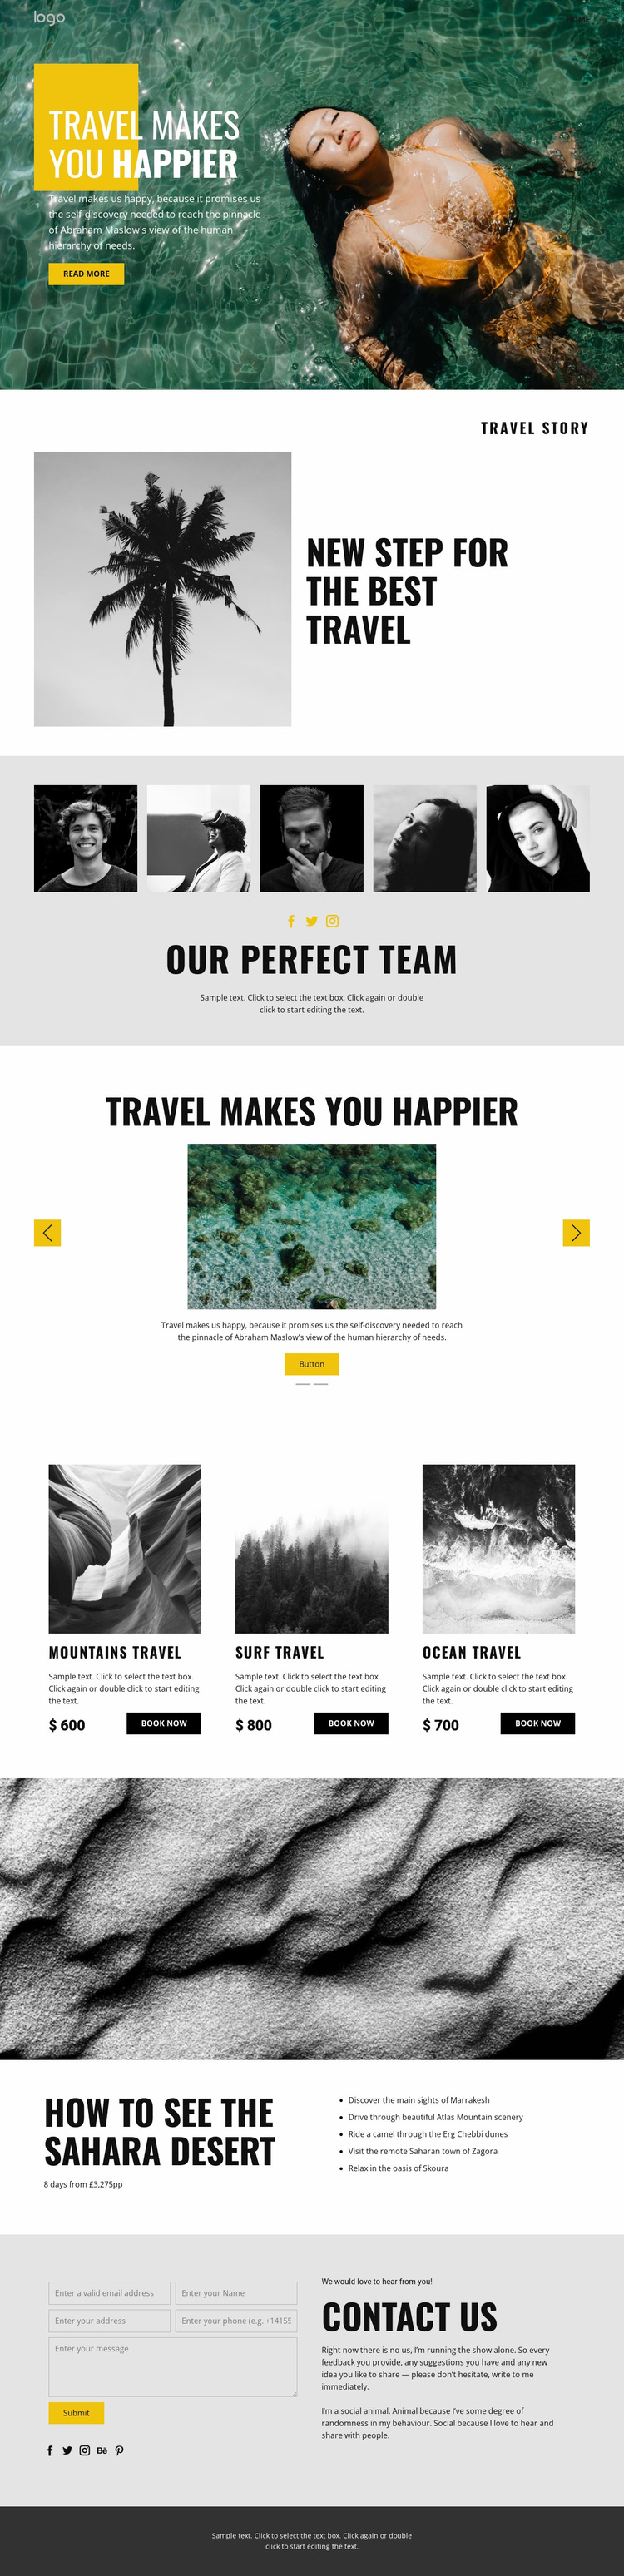 Happy people deserve travel Website Design